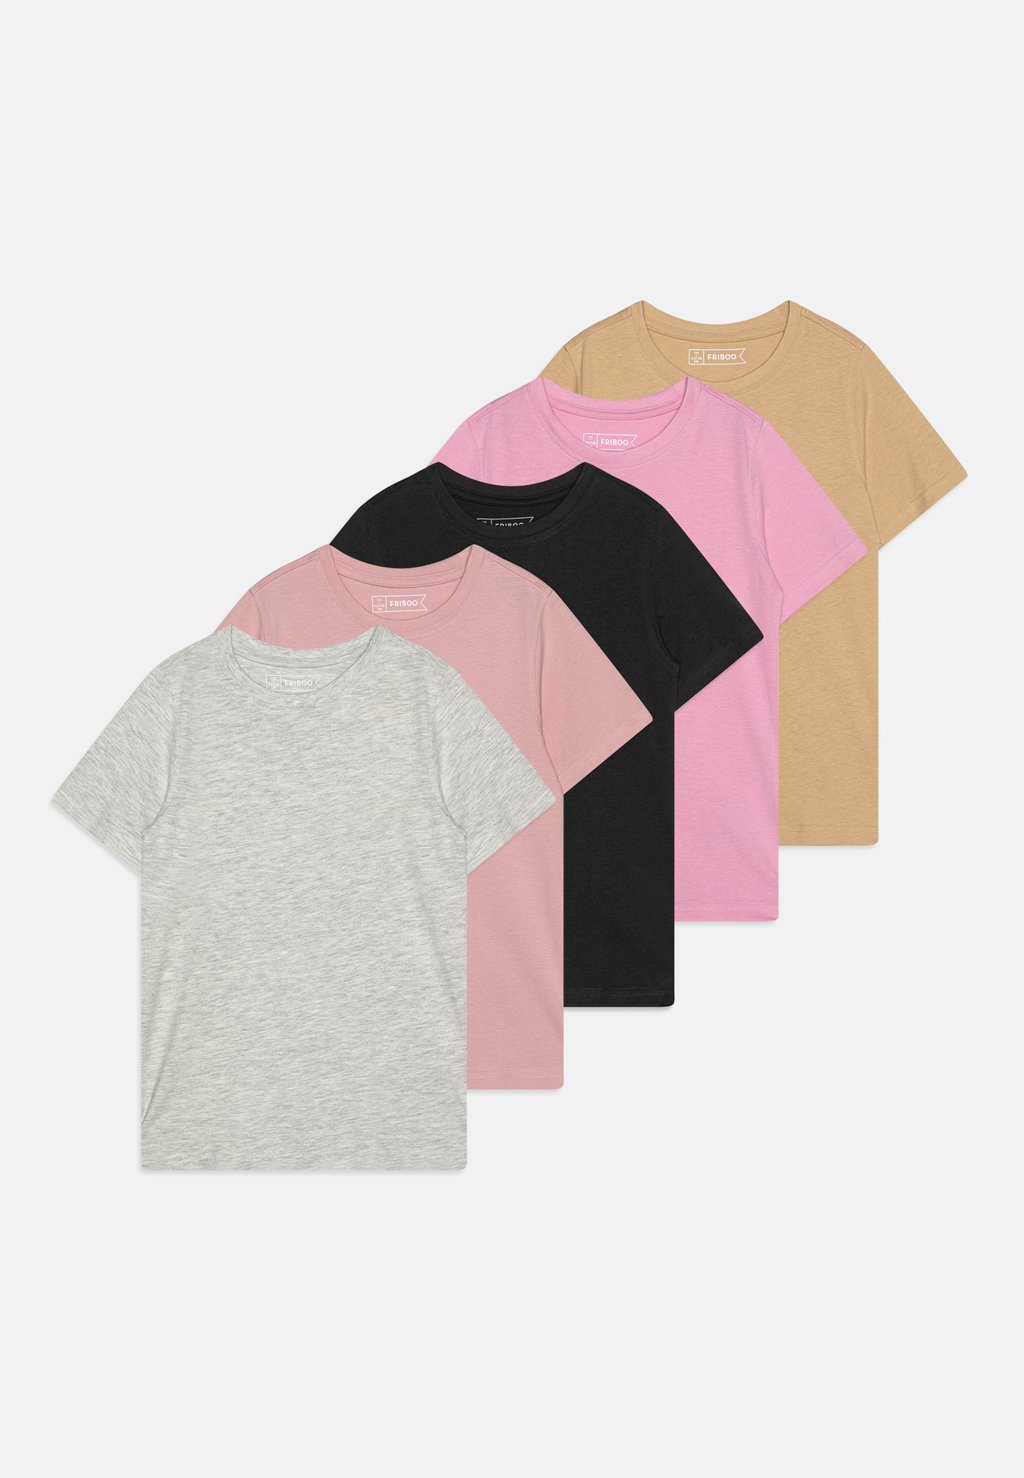 футболка с принтом Unisex 5 Pack Friboo, цвет black/light pink/mottled light grey t6369 light light black 700 мл c13t636900